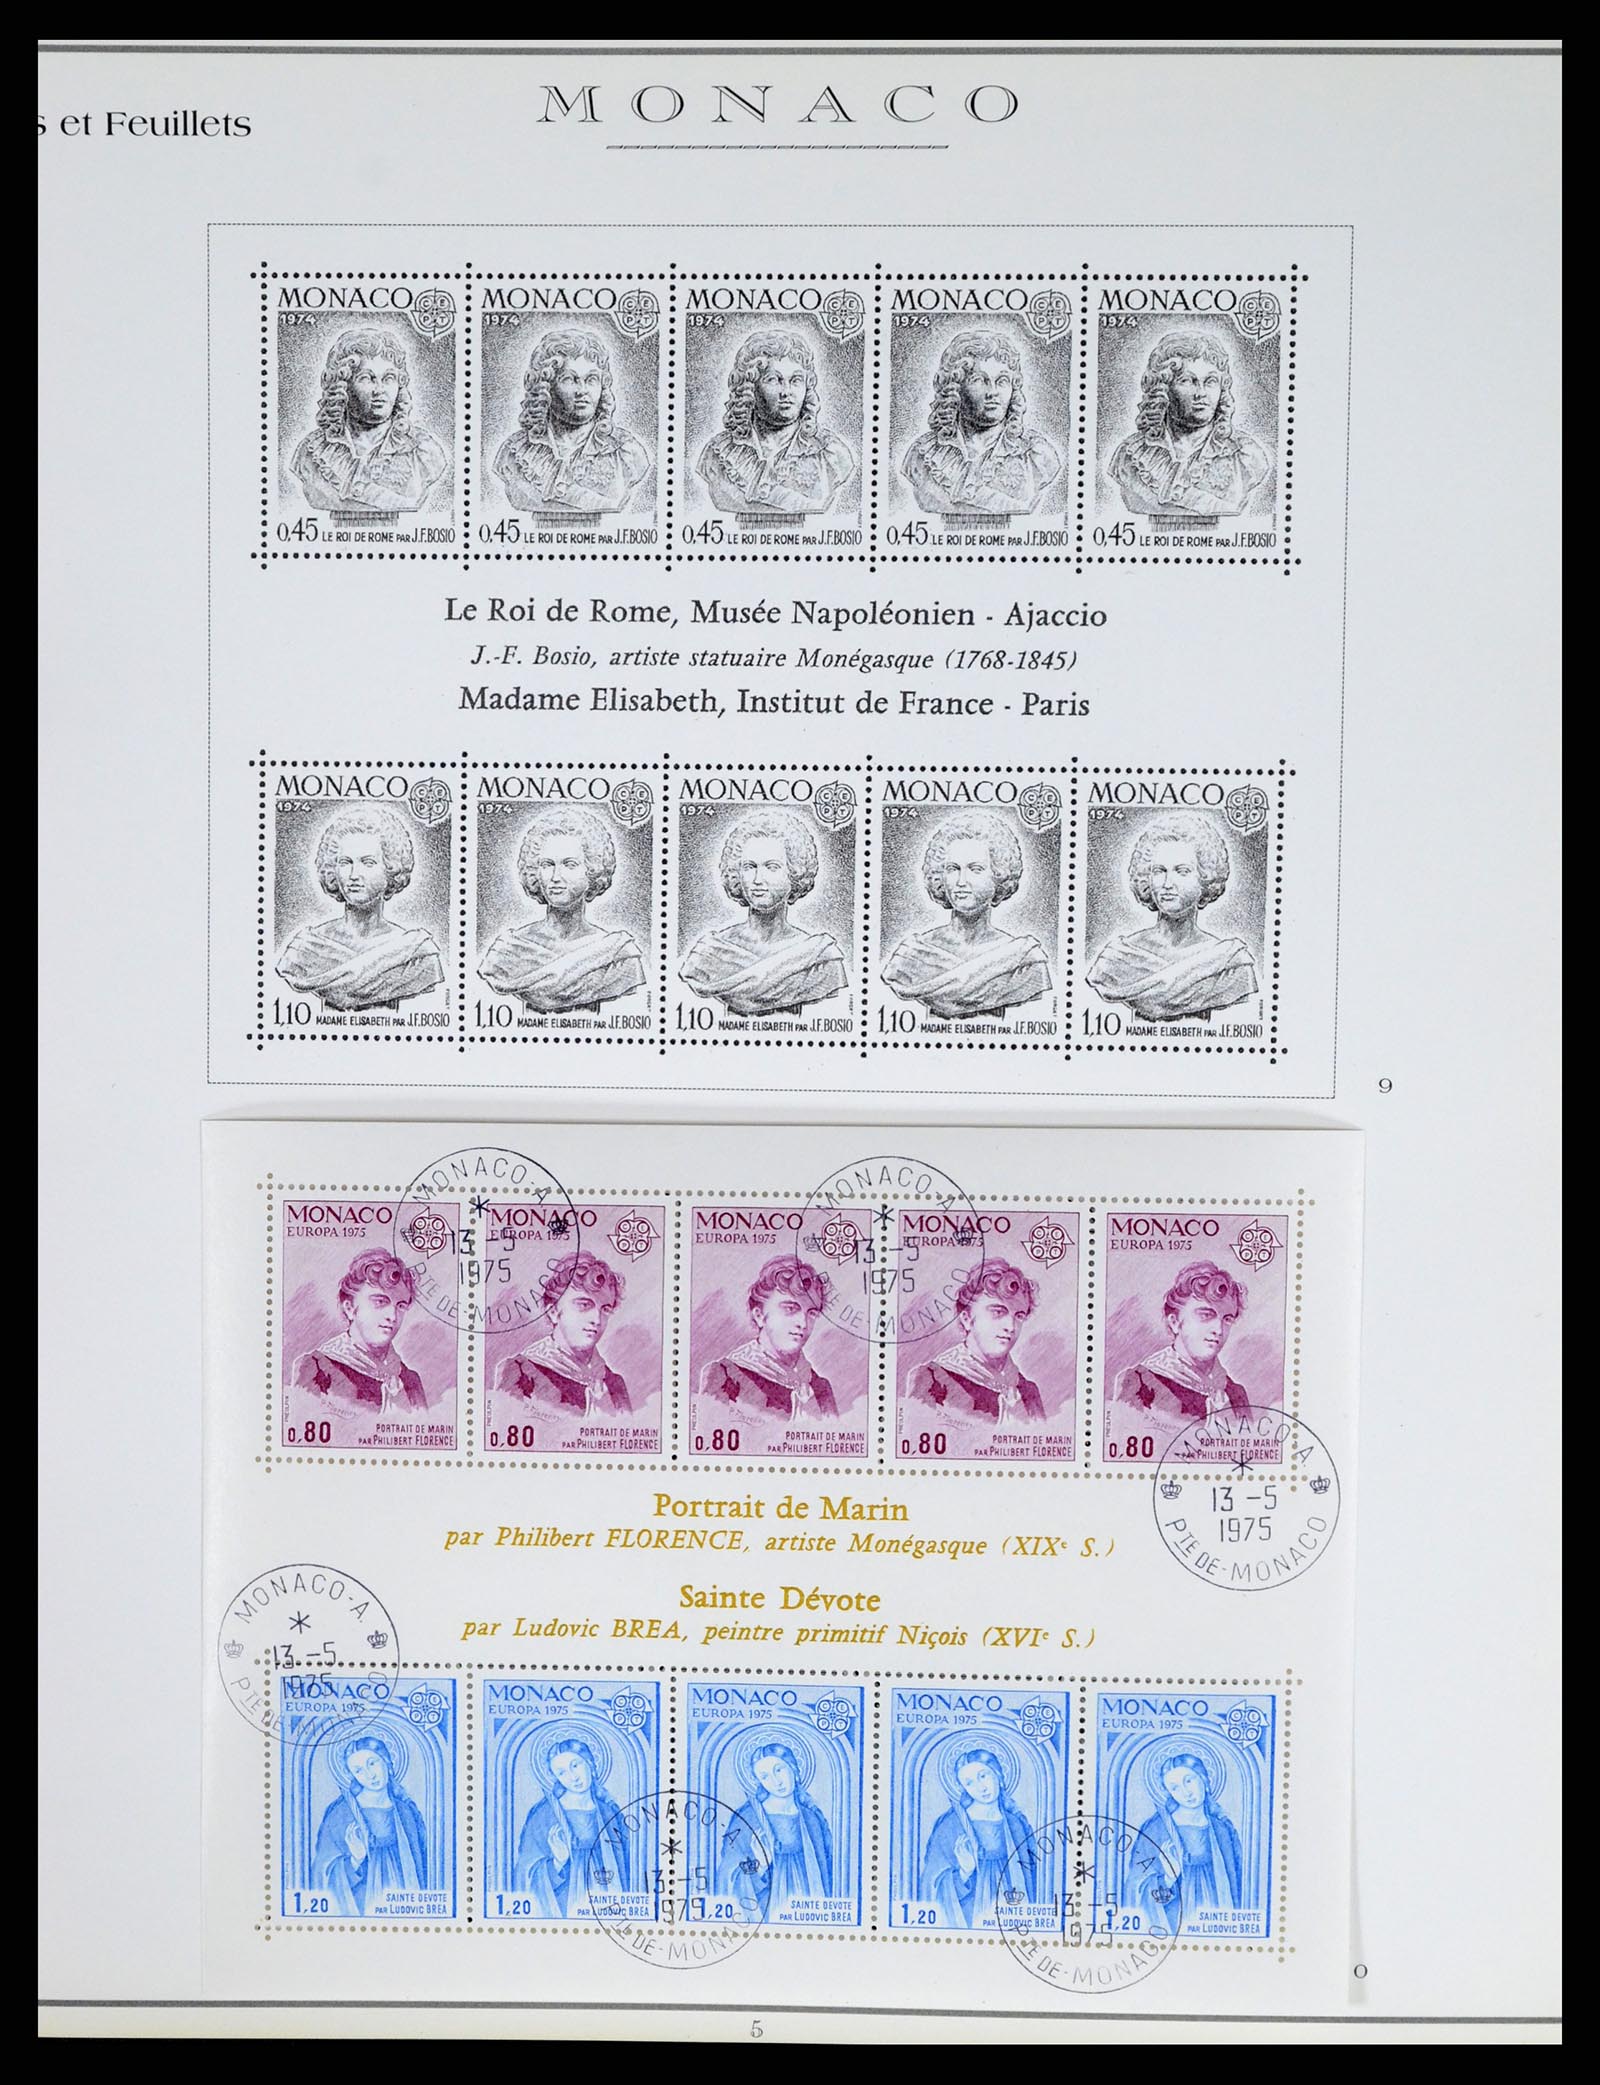 37437 175 - Stamp collection 37437 Monaco 1885-1996.